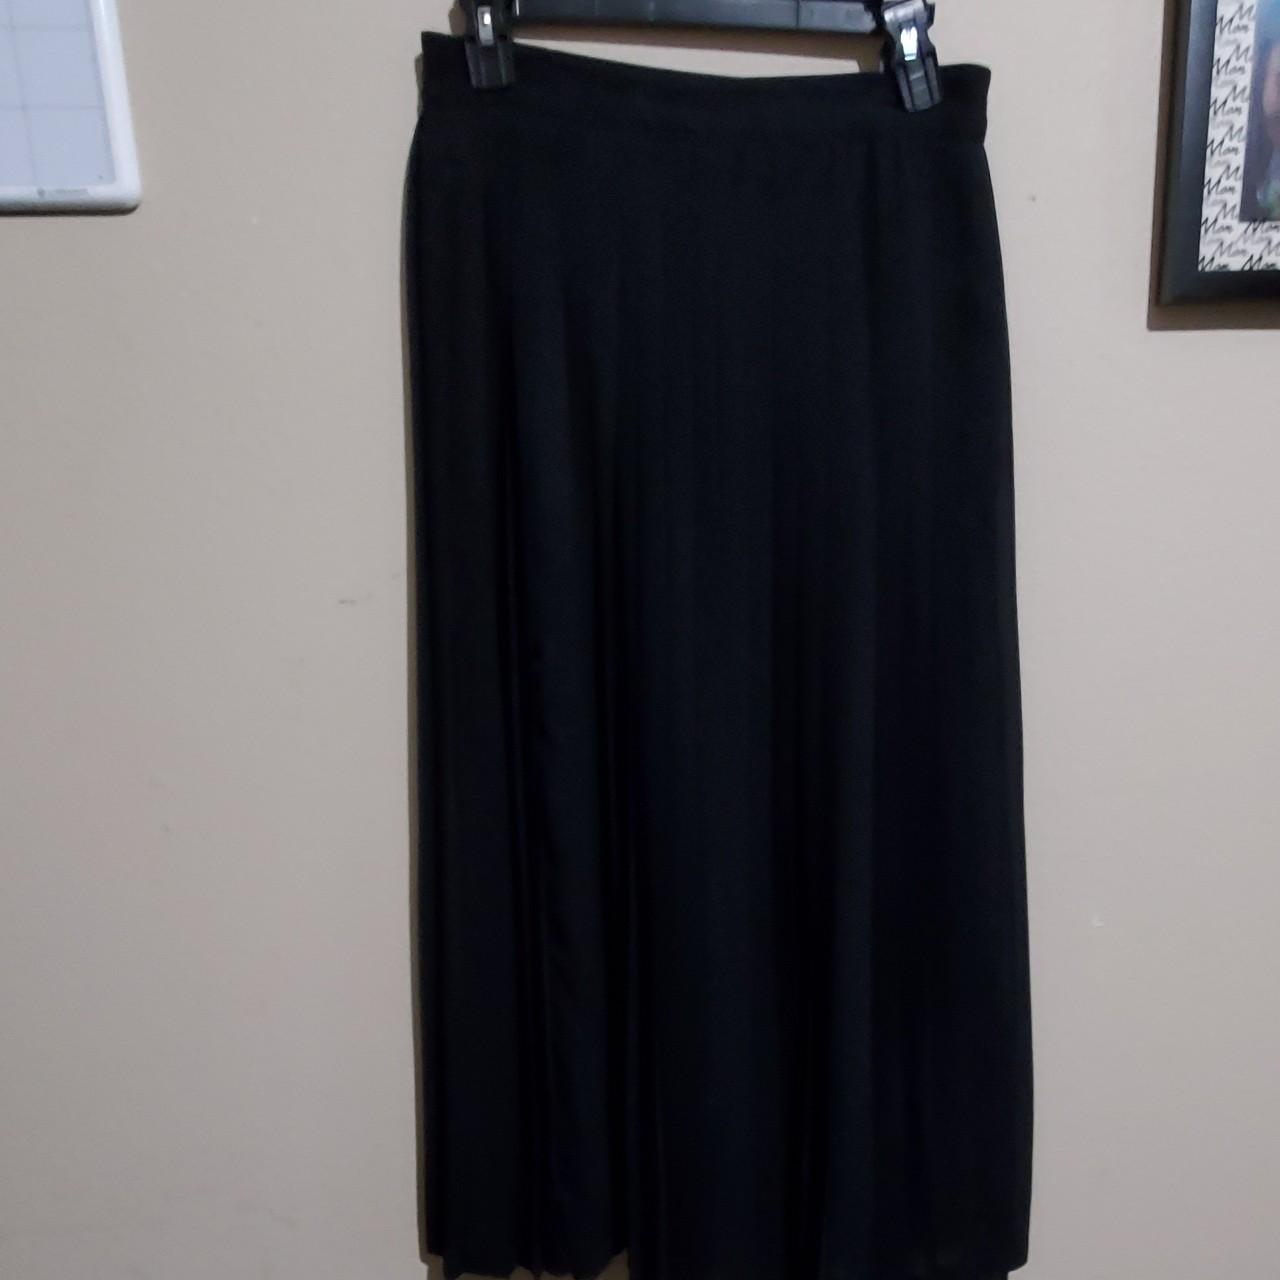 Chaus Women's Black Skirt